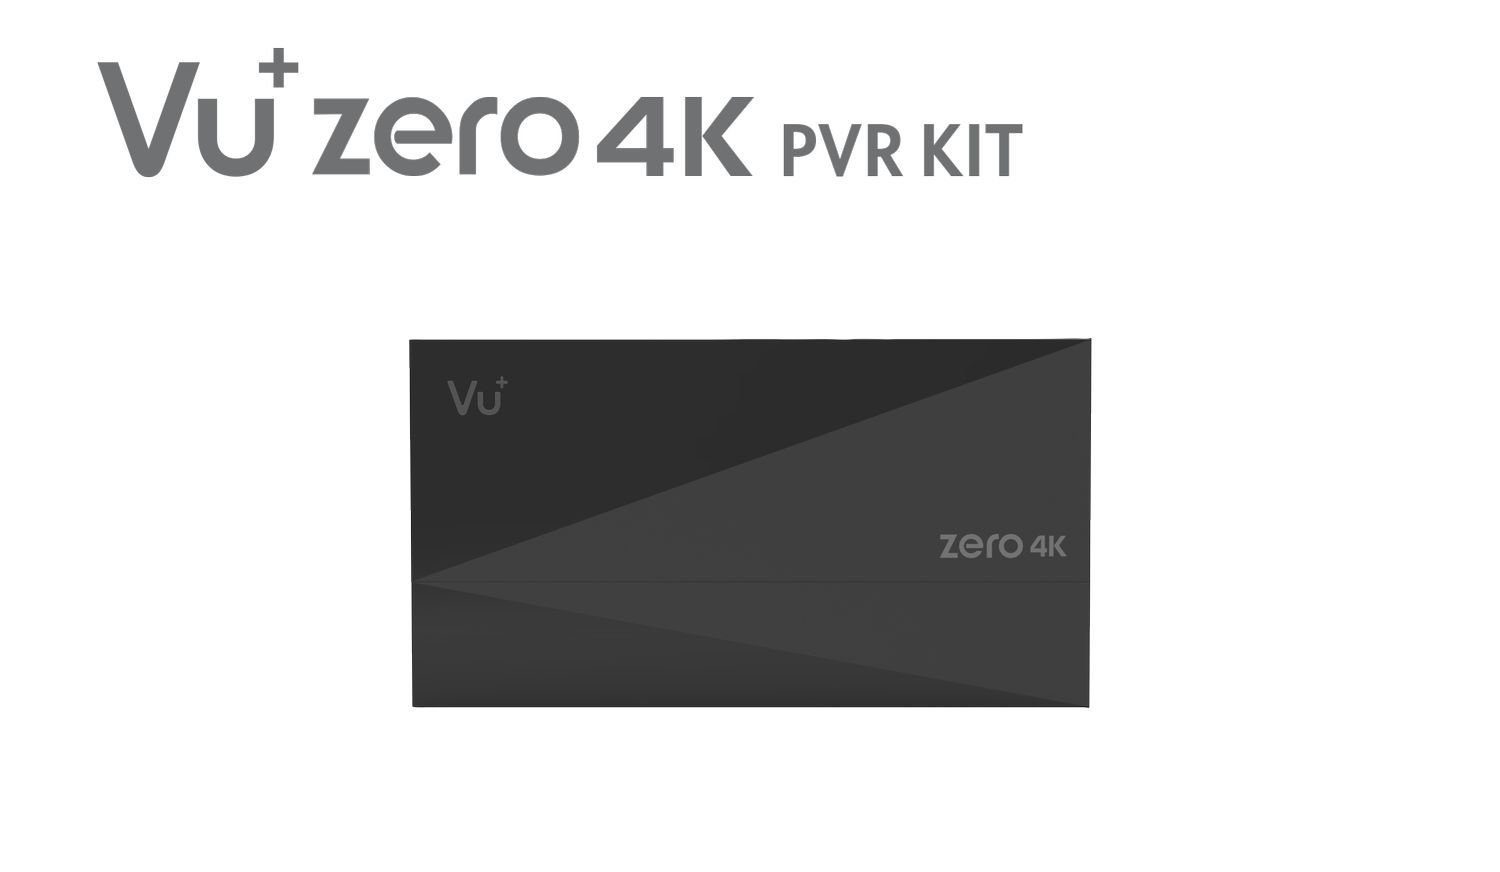 Kit Inklusive 500GB, VU+ VU+ PVR schwarz 4K HDD, Tuner Zero